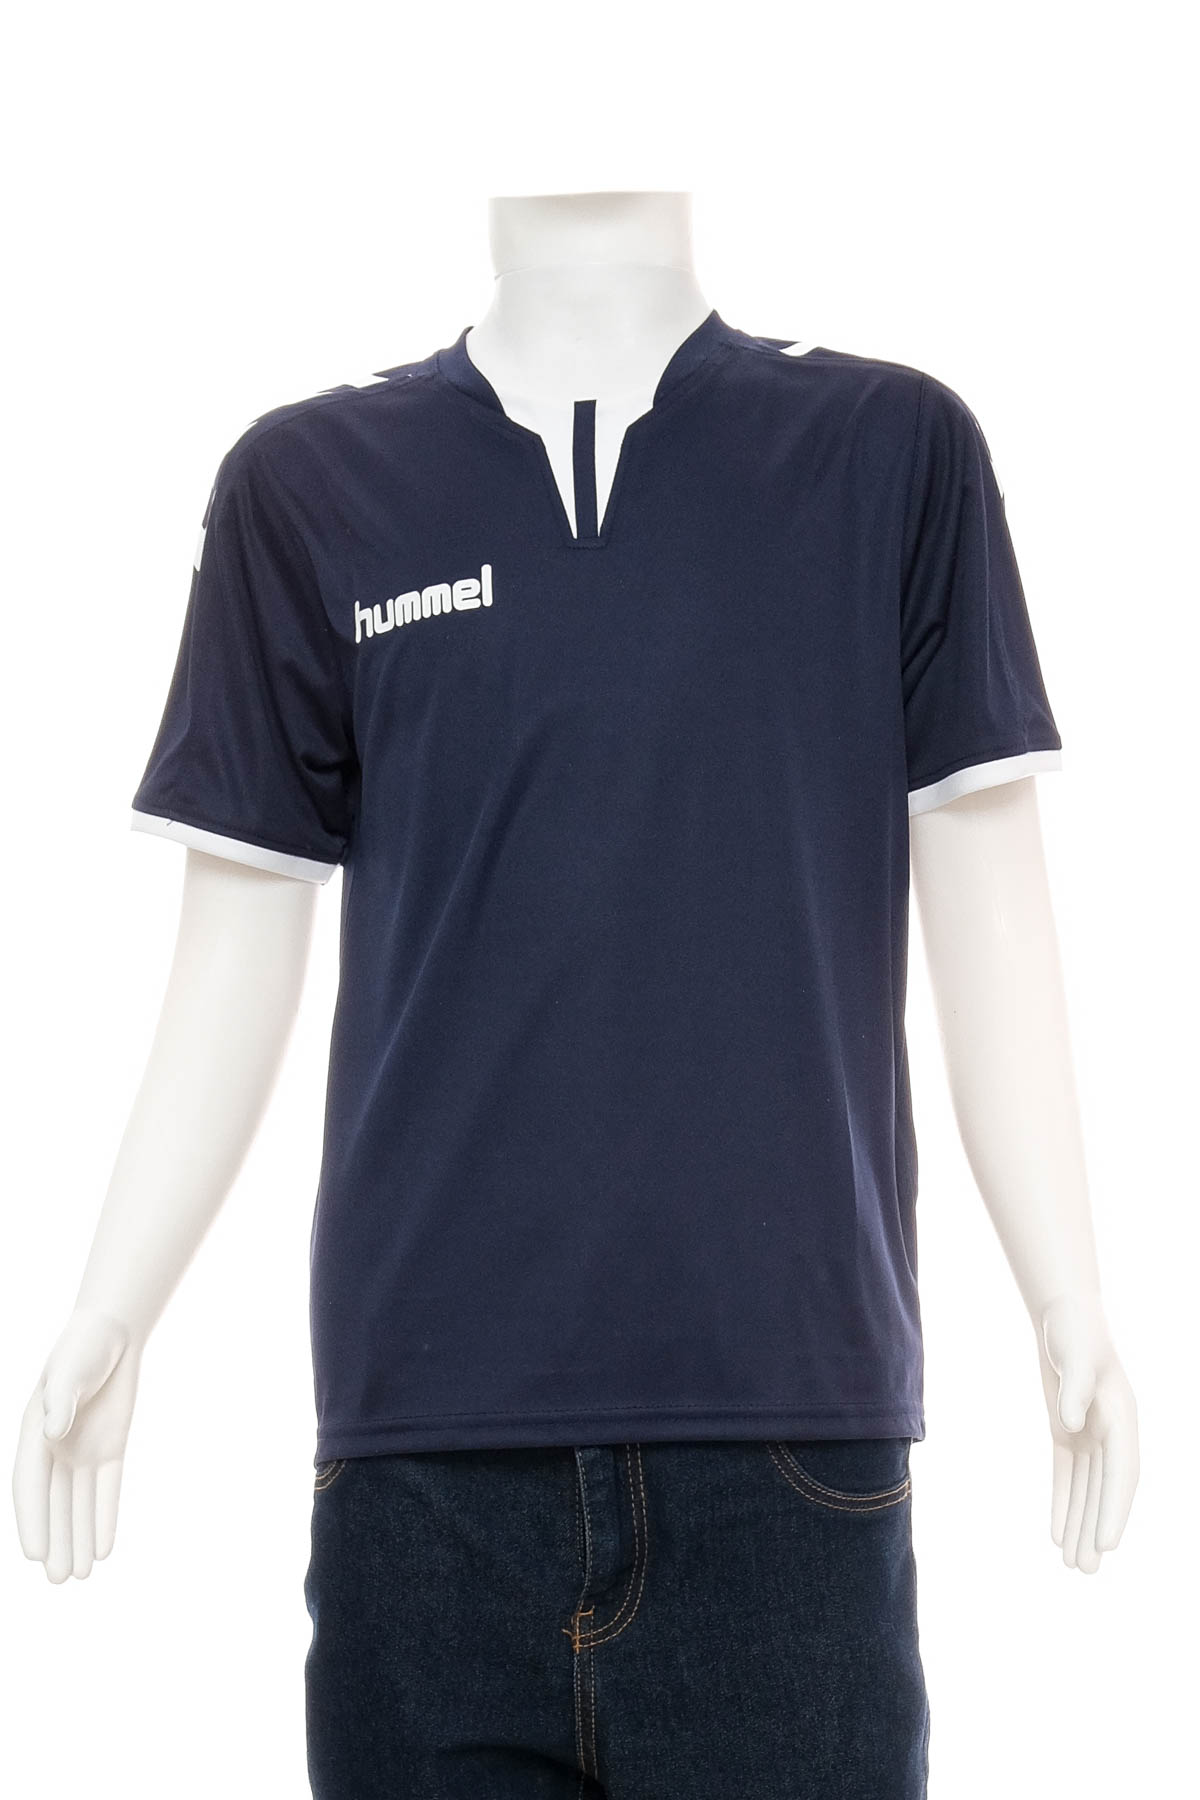 T-shirt για αγόρι - Hummel - 0